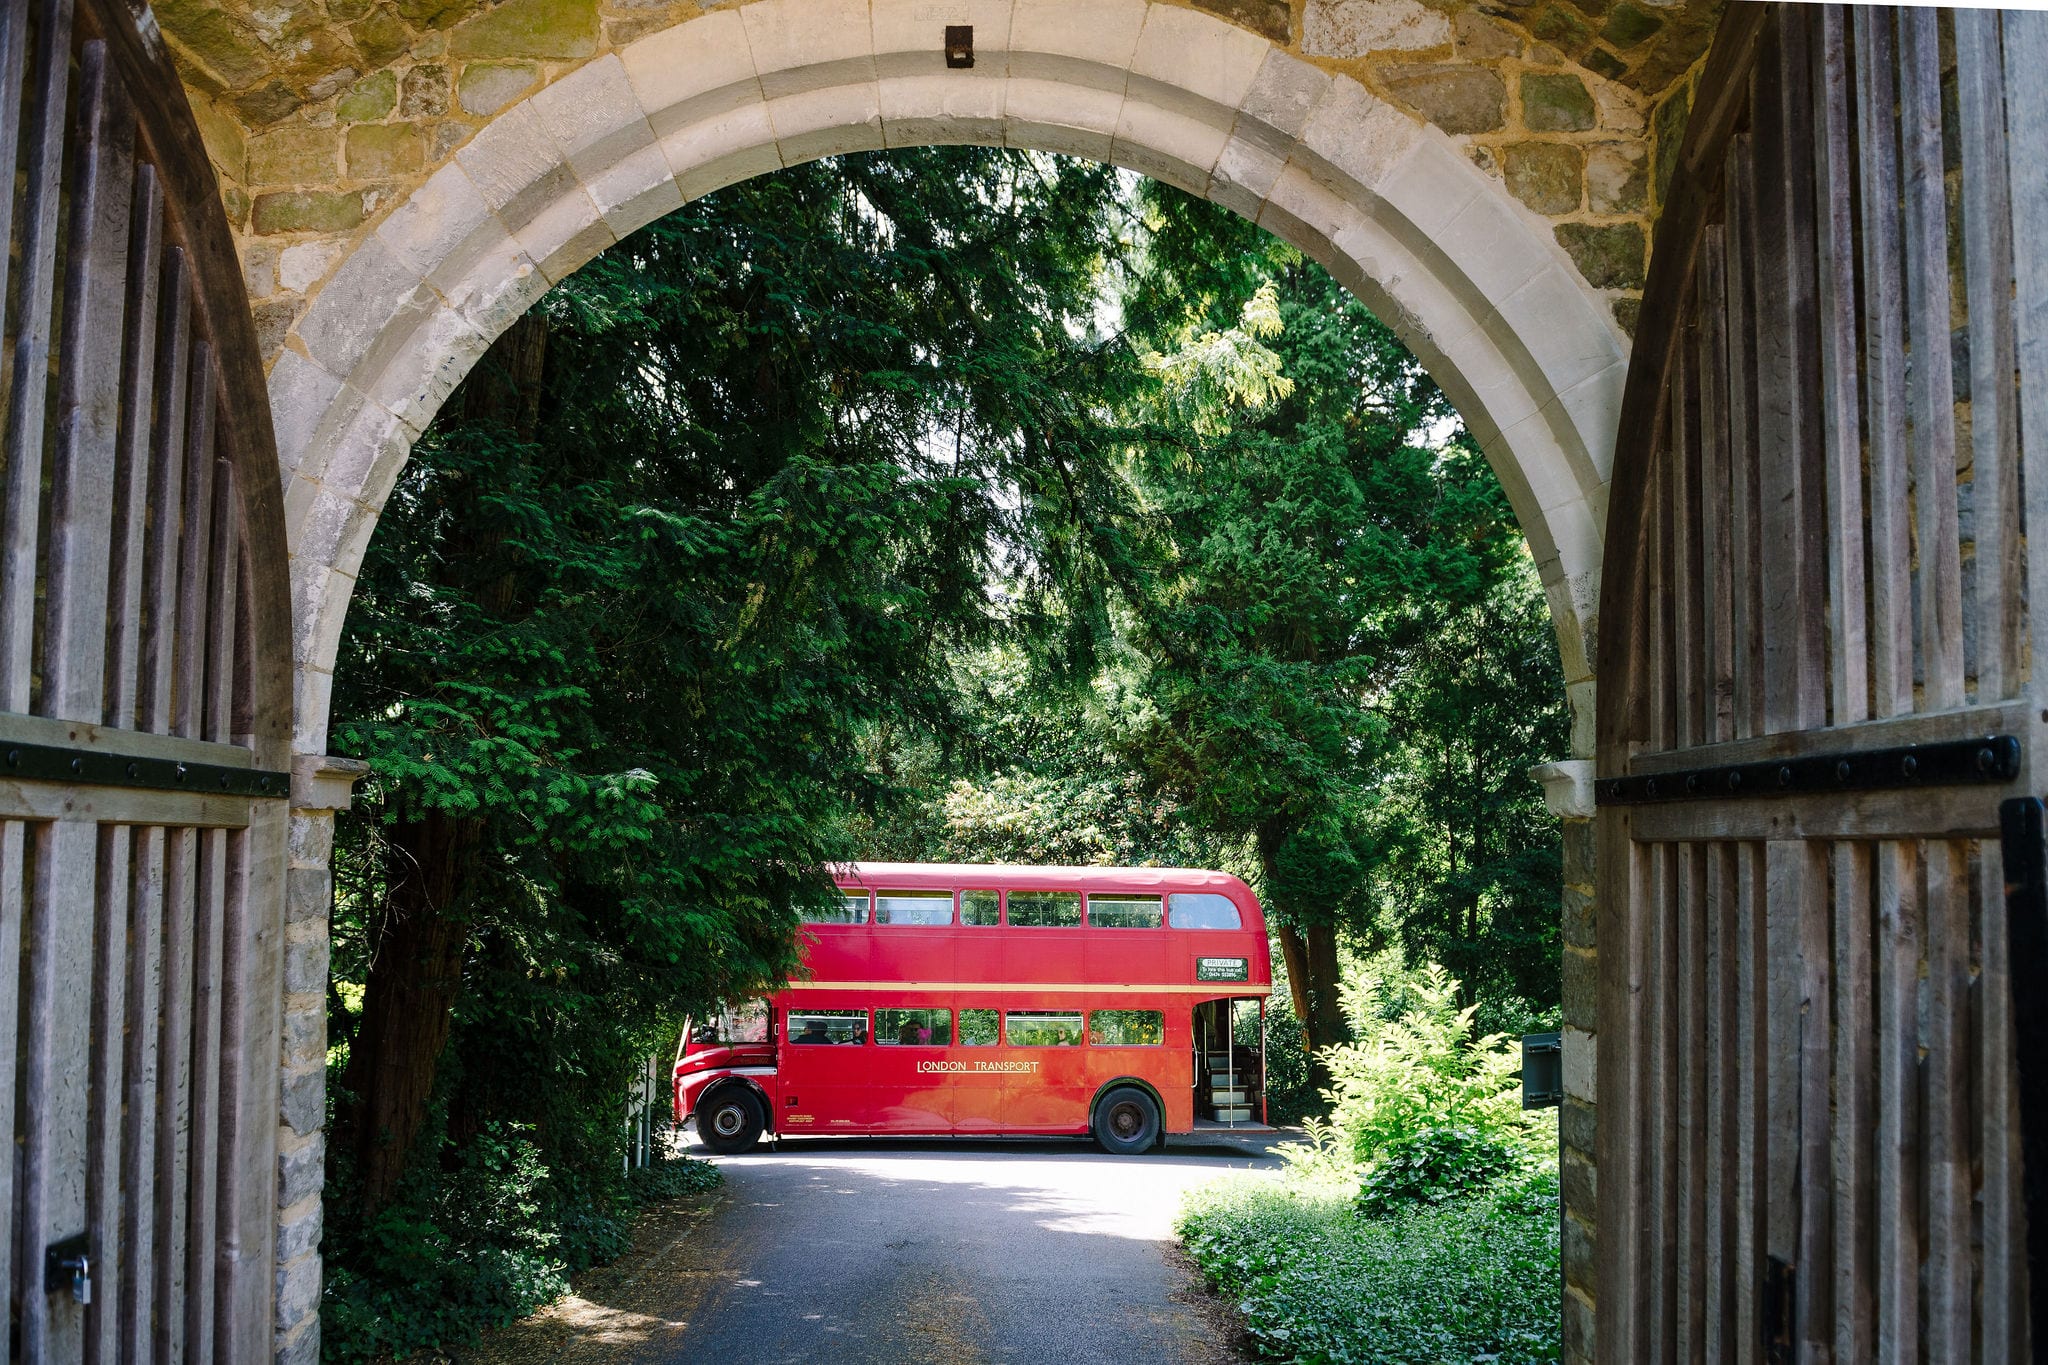 London bus wedding transport in Surrey